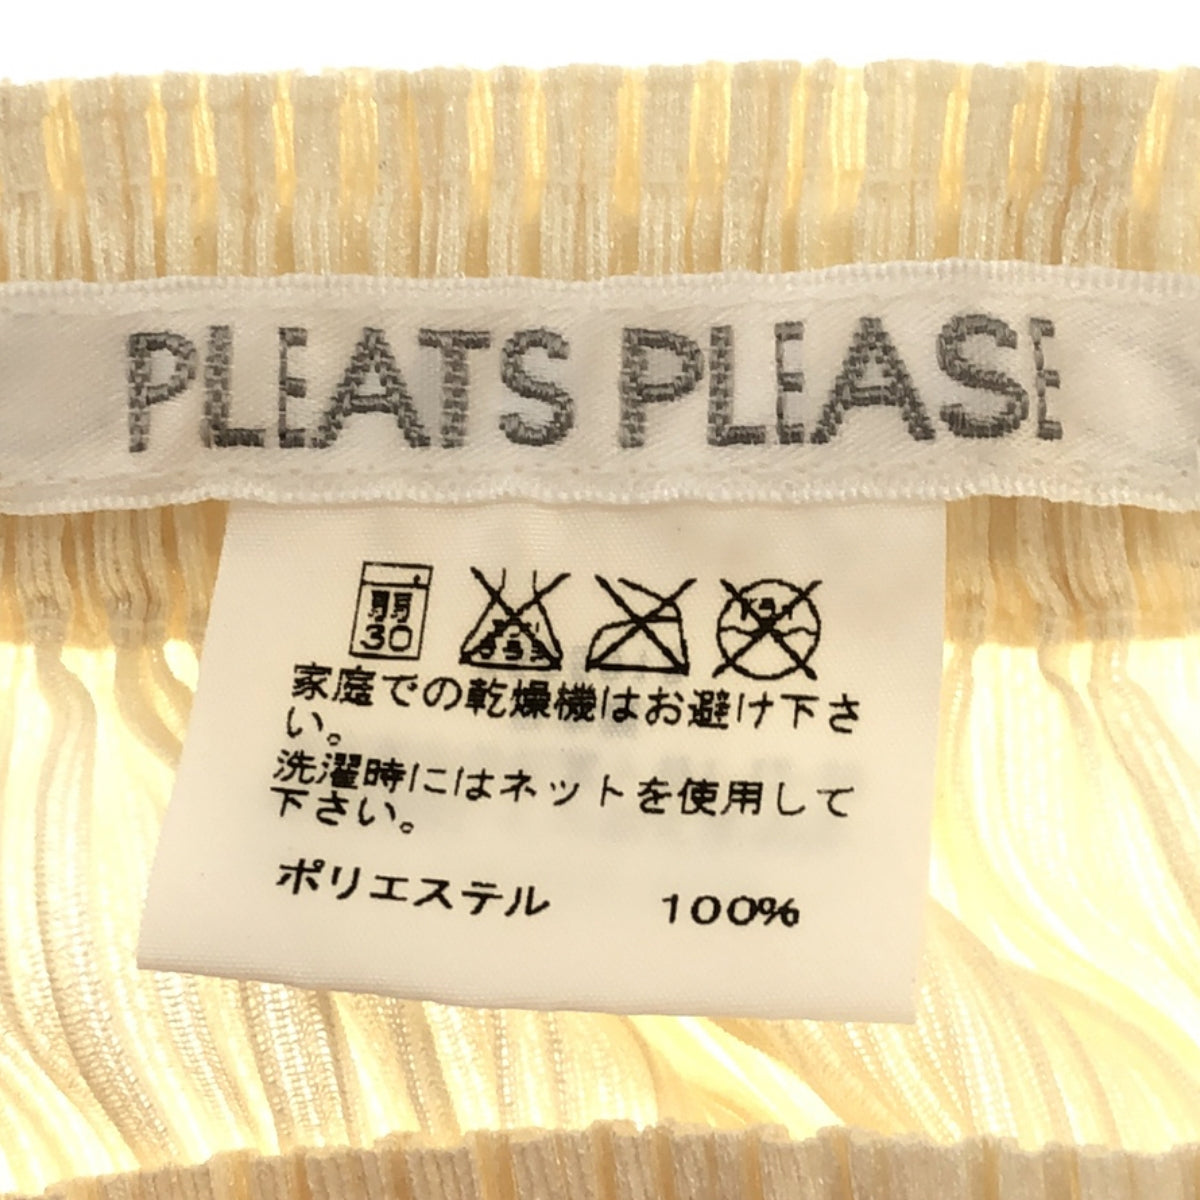 PLEATS PLEASE ISSEY MIYAKE / プリーツプリーズイッセイミヤケ | プリーツスカート | 1 | レディース